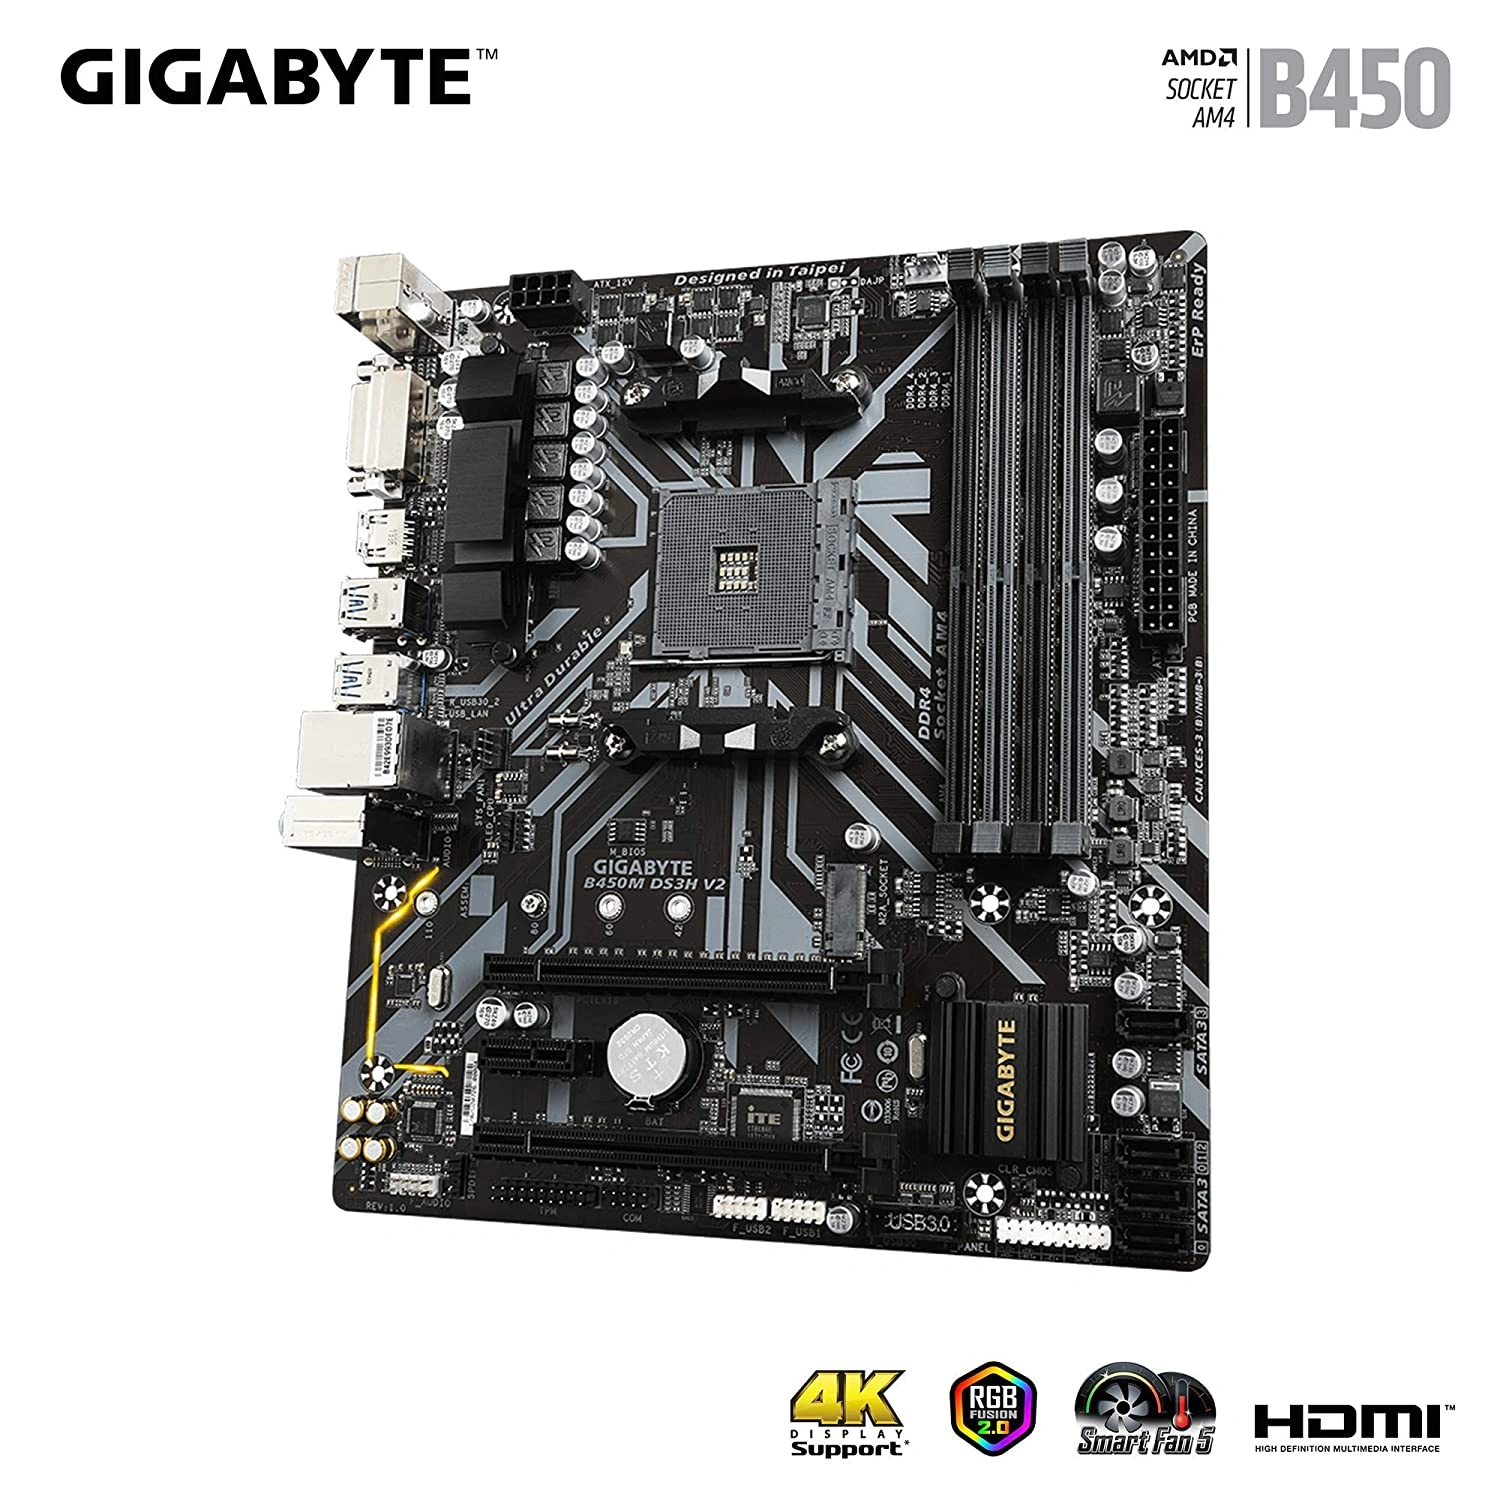 GIGABYTE AMD B450M DS3H V2 Ultra Durable Motherboard with Digital VRM Solution, GIGABYTE Gaming LAN and Bandwidth Management, PCIe Gen3 x4 M.2, Anti-Sulfur Resistor, RGB LED Strip Header-2